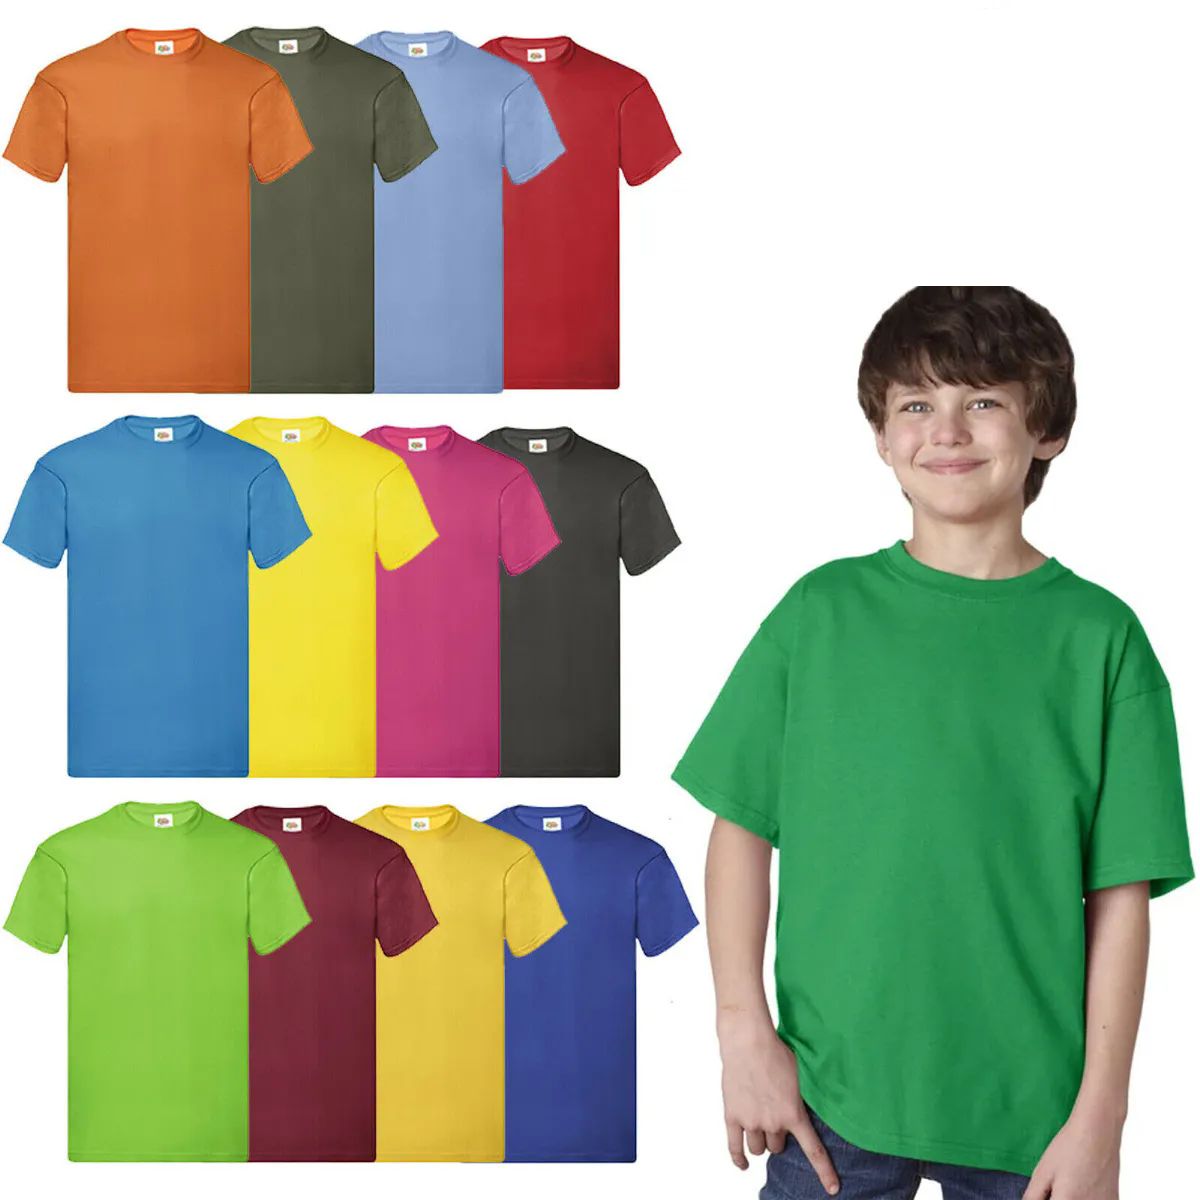 504 Bulk Billion Hats Kids Youth Cotton Assorted Colors T Shirts Size xs